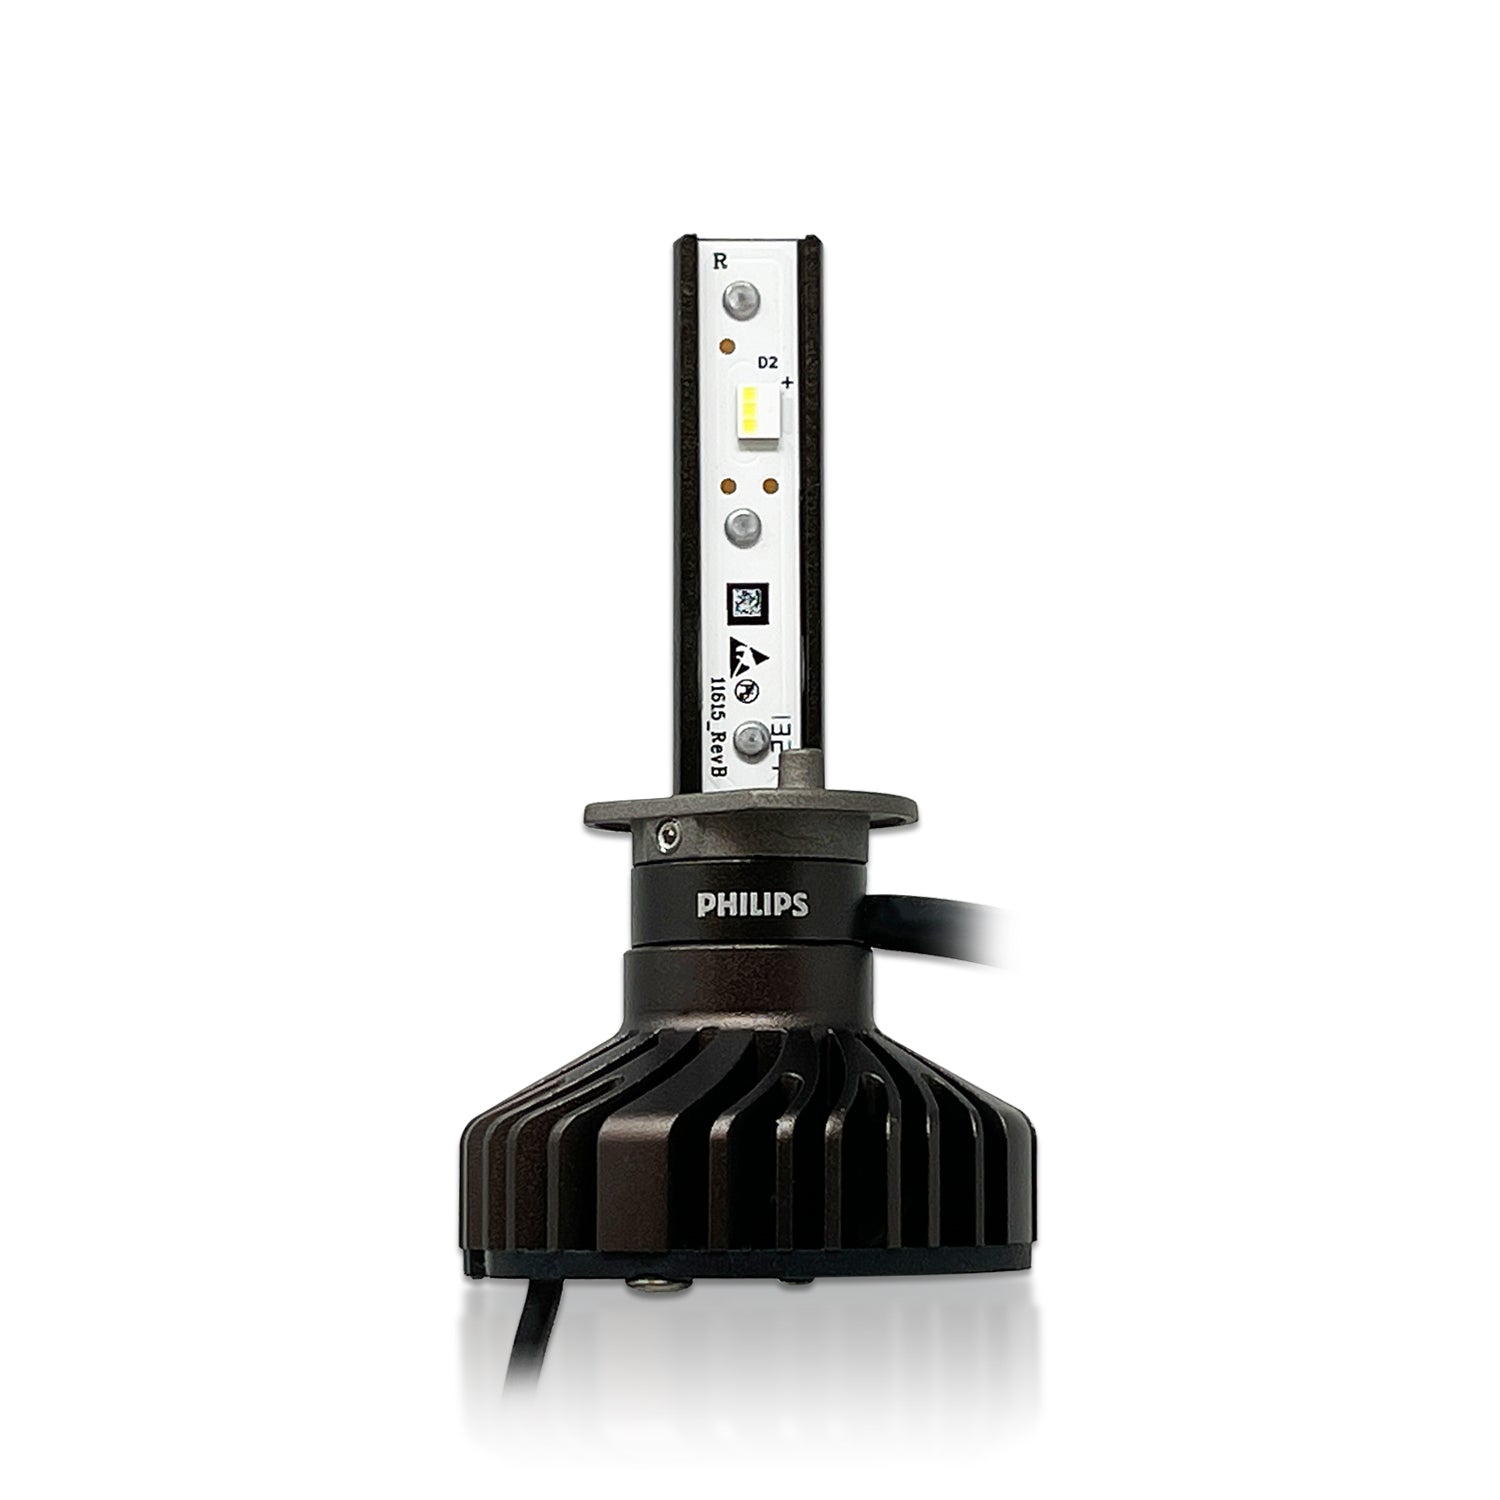 Philips Ultinon Pro9000 LED Headlight Bulbs information 